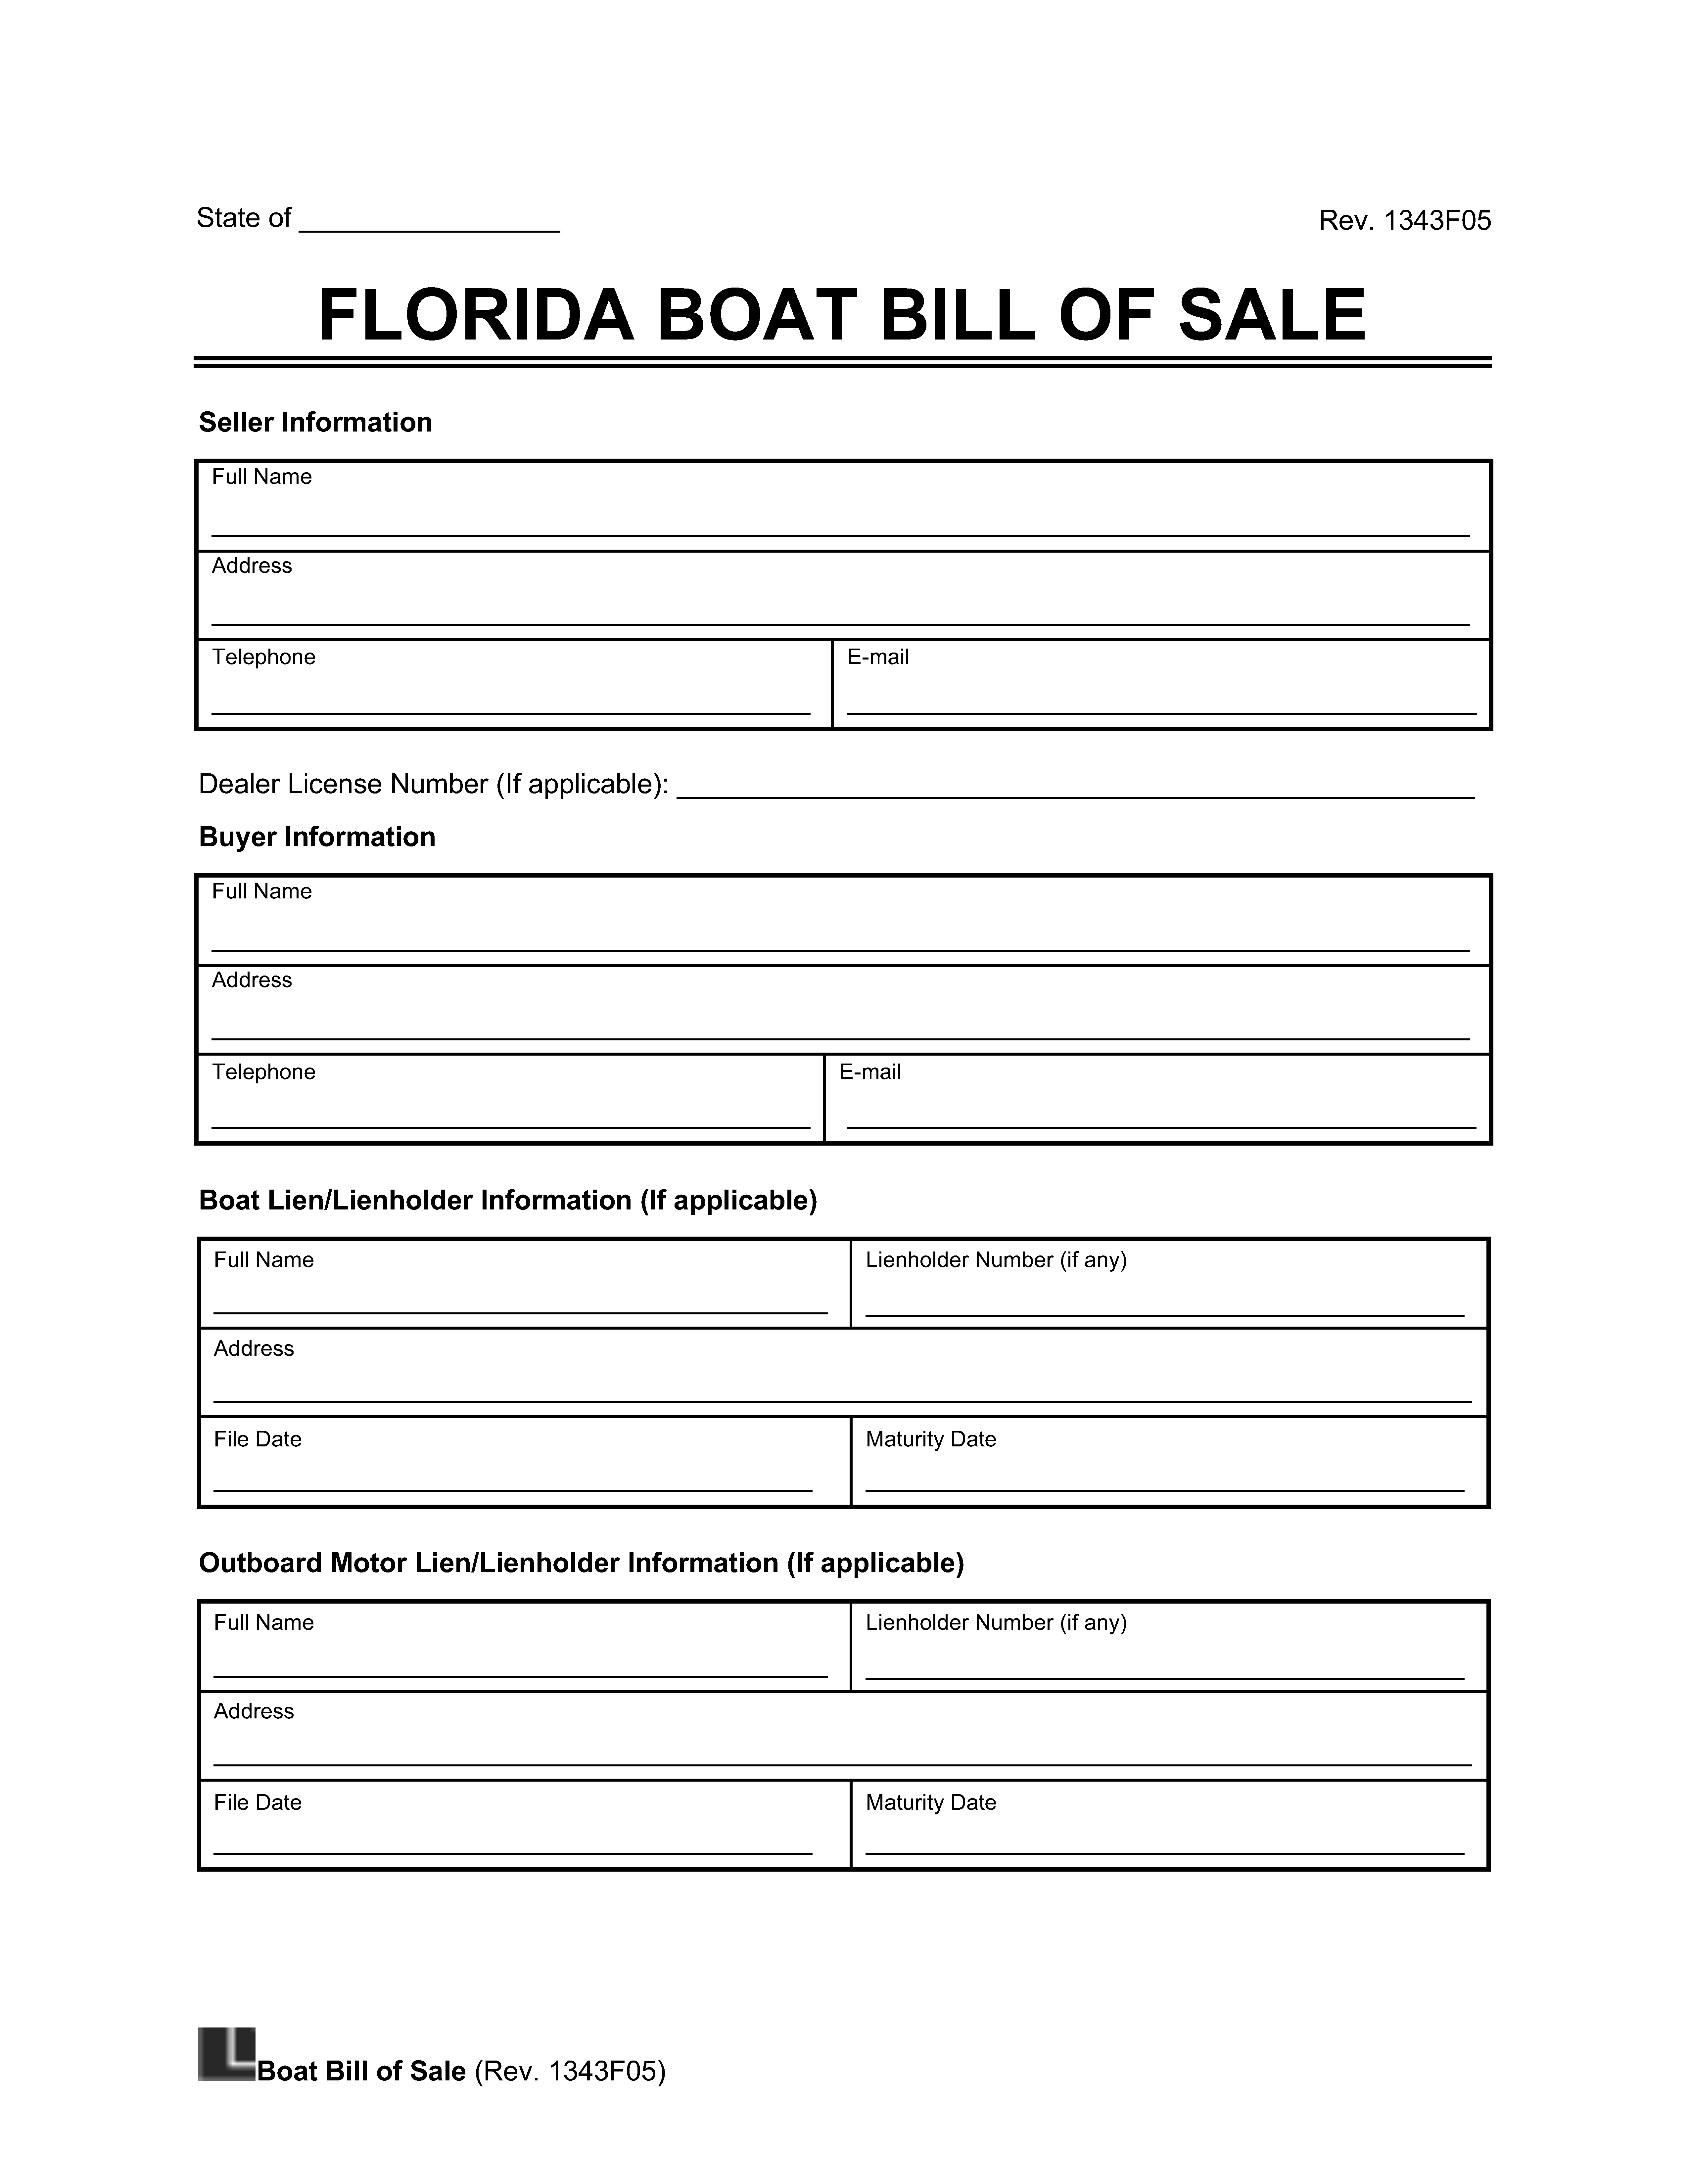 Boat Bill of Sale Florida screenshot